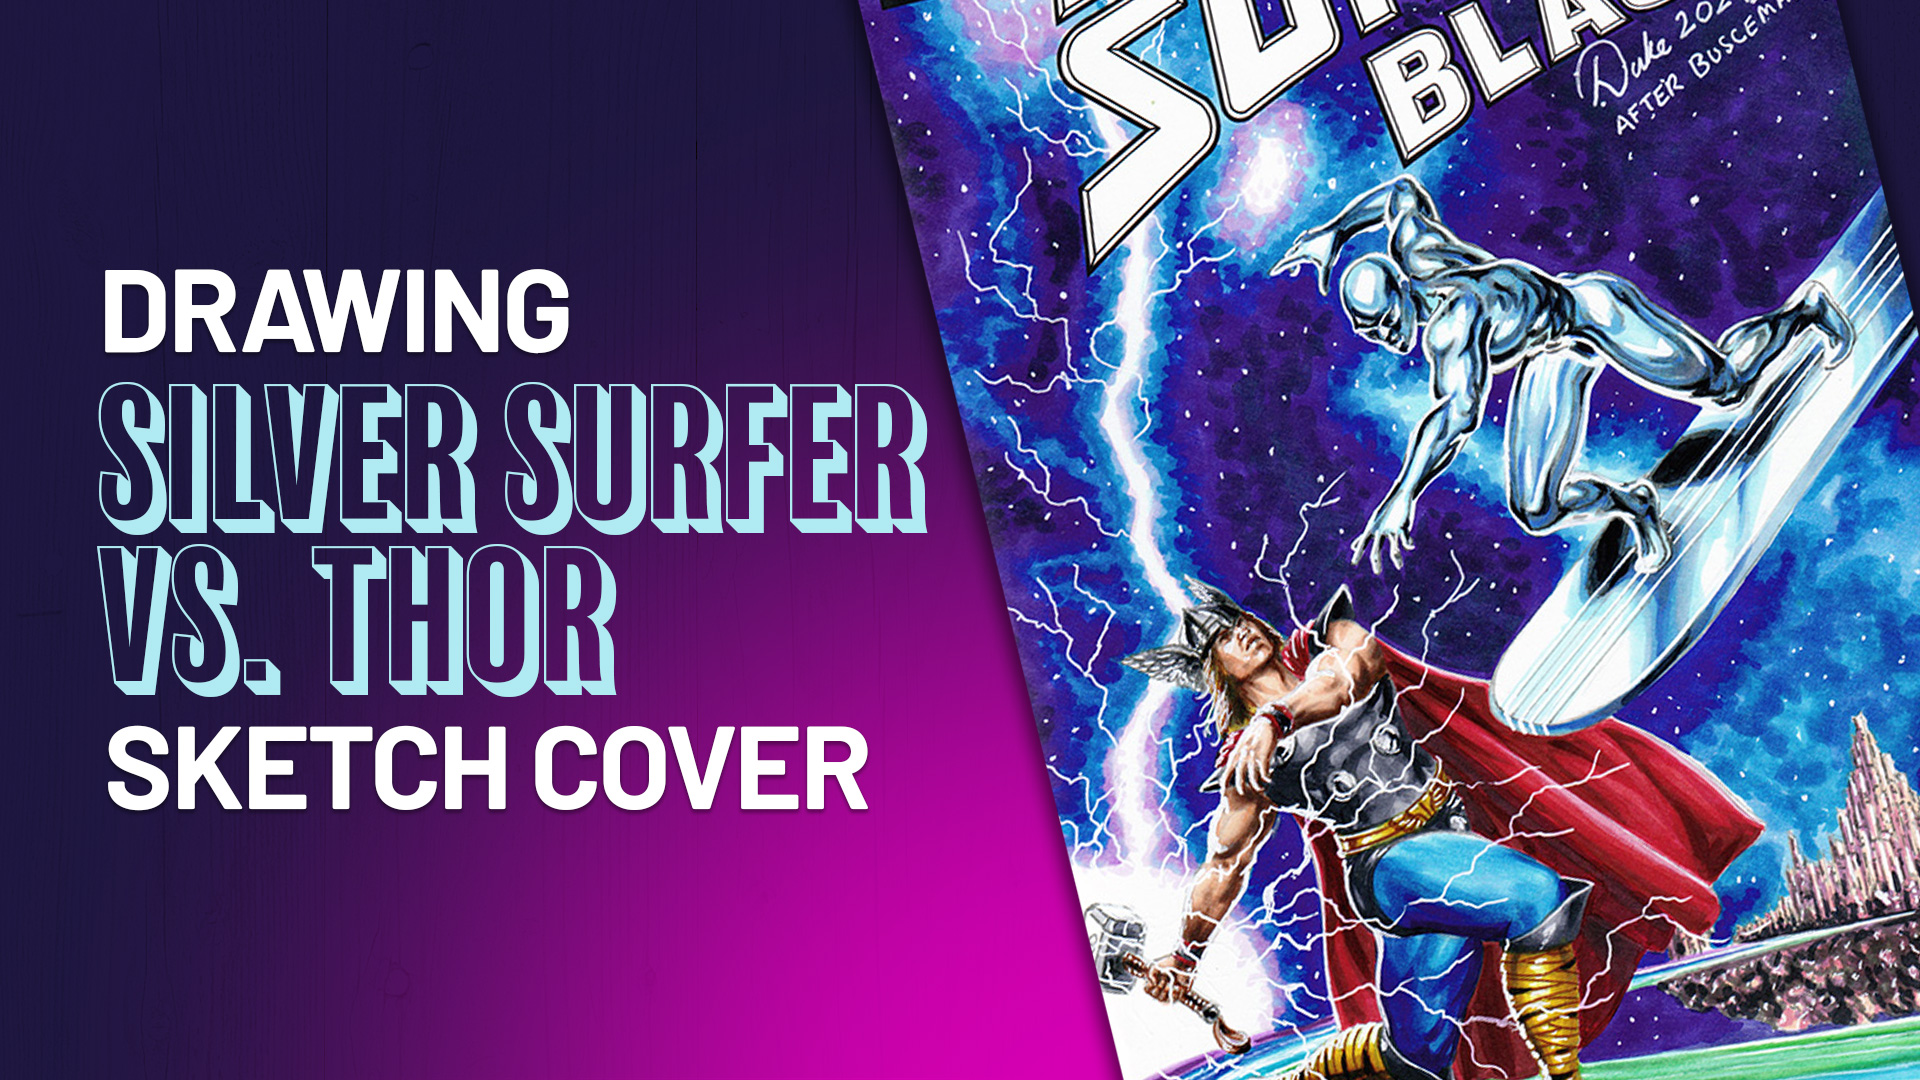 Silver Surfer vs. Thor Sketch Cover by Duke